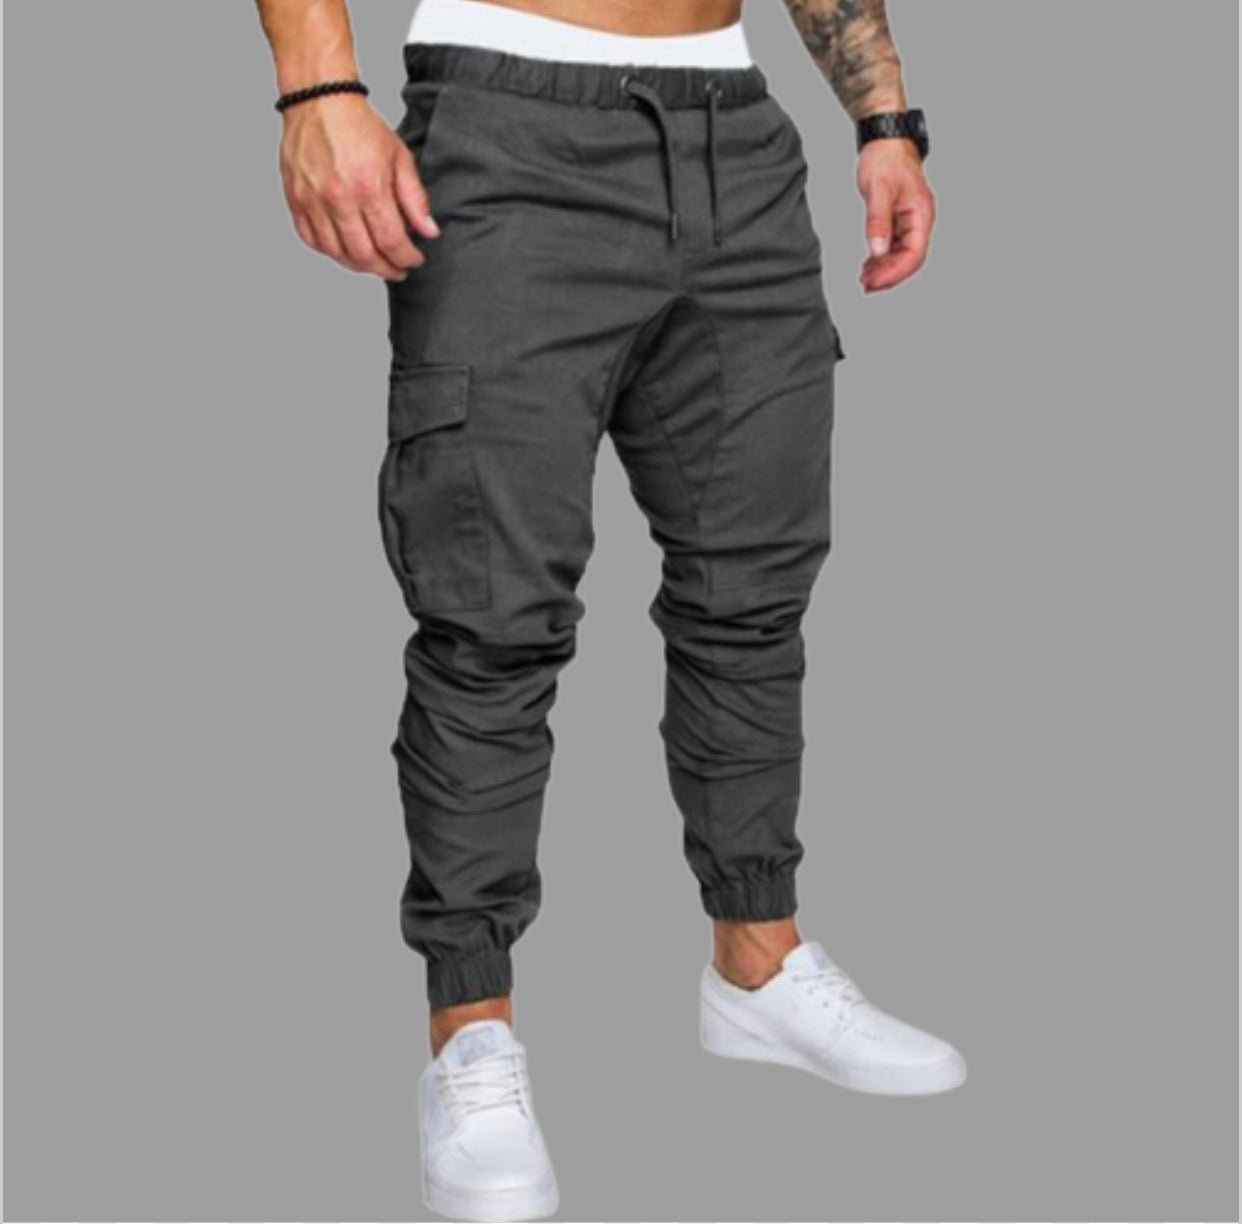 Solid Multi-pocket Combat Pants Skinny Fit Sweatpants